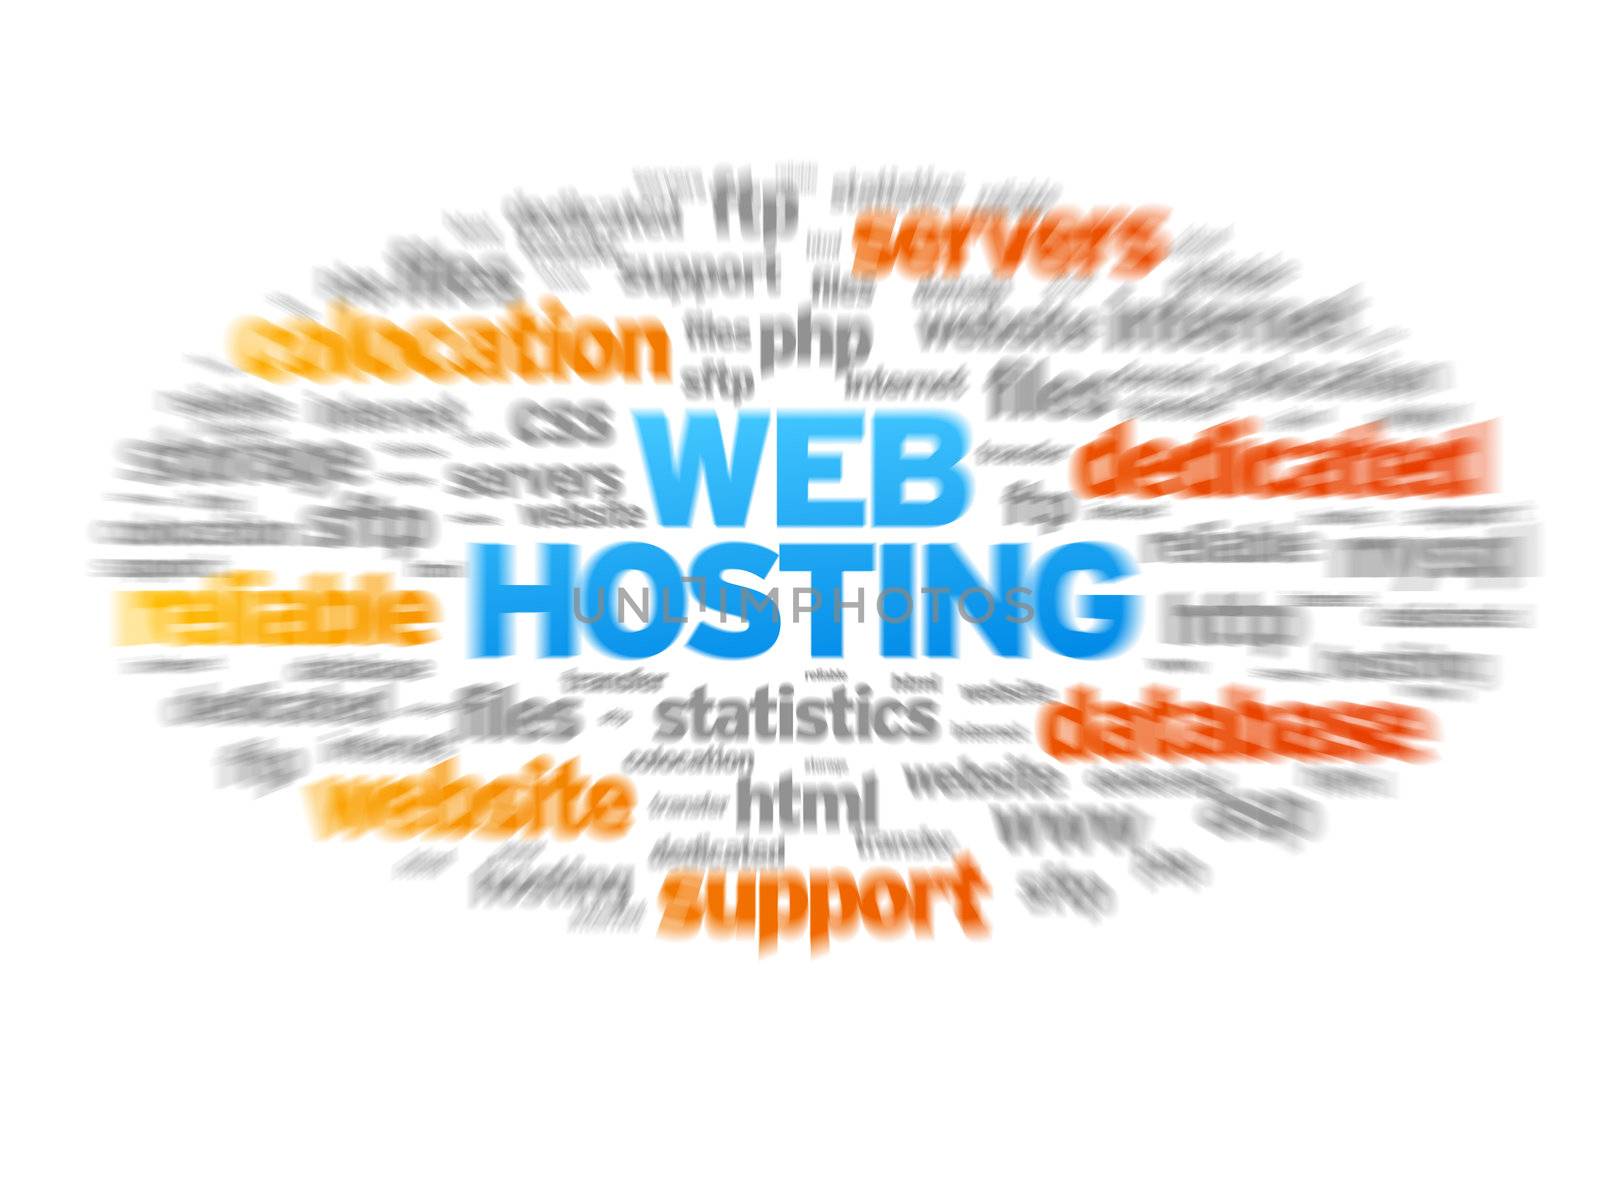 Web Hosting by kbuntu